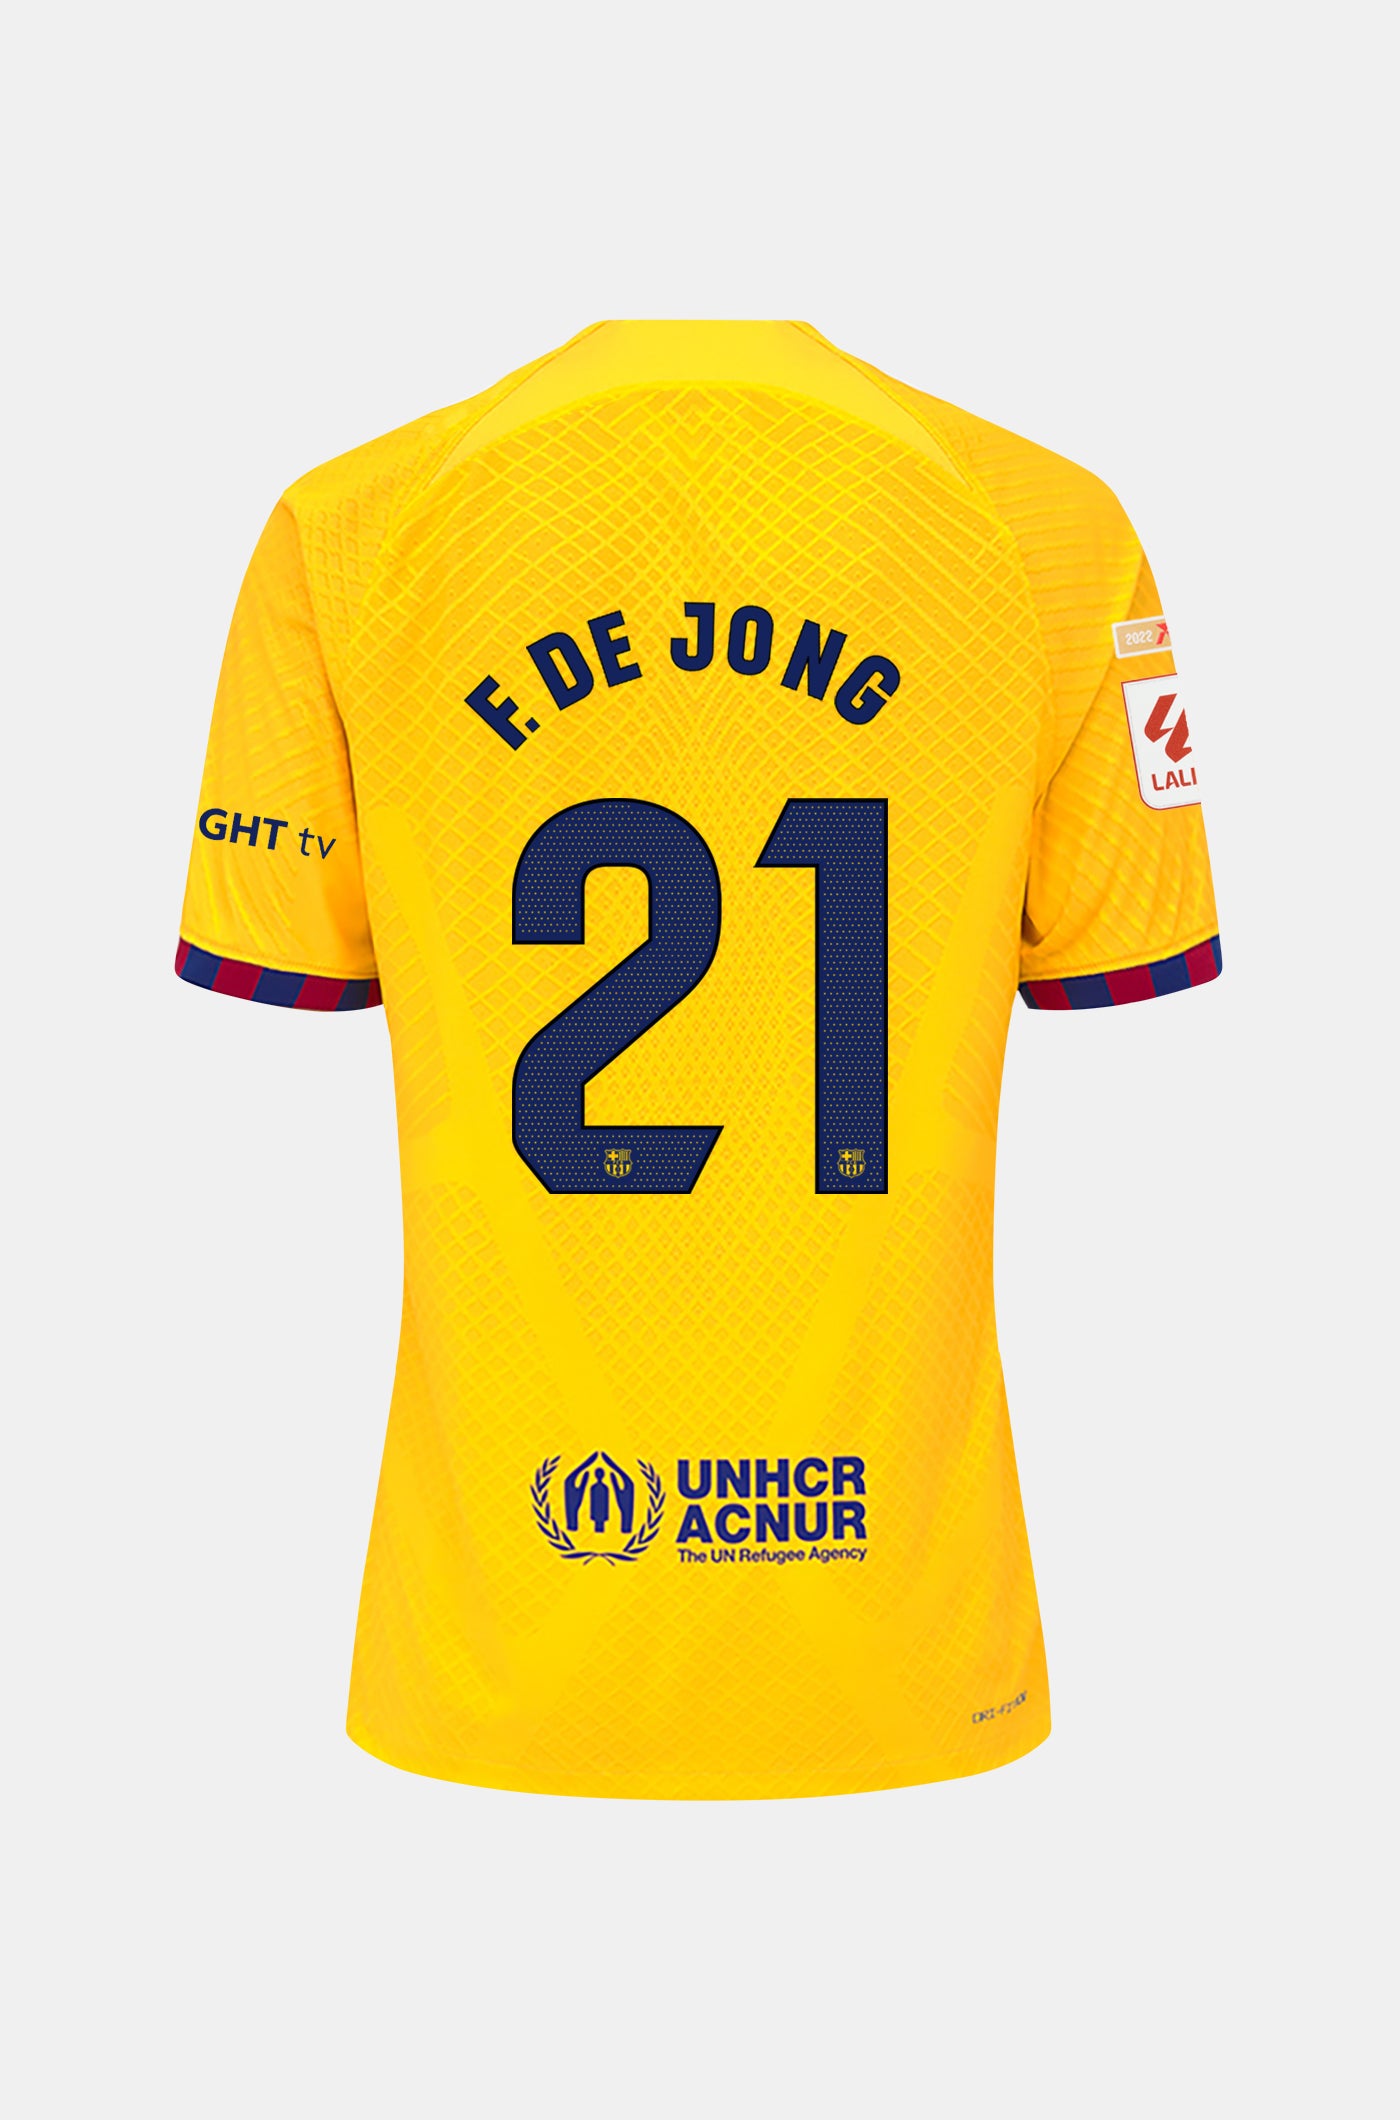 LFP FC Barcelona fourth shirt 23/24 Player’s Edition  - F. DE JONG